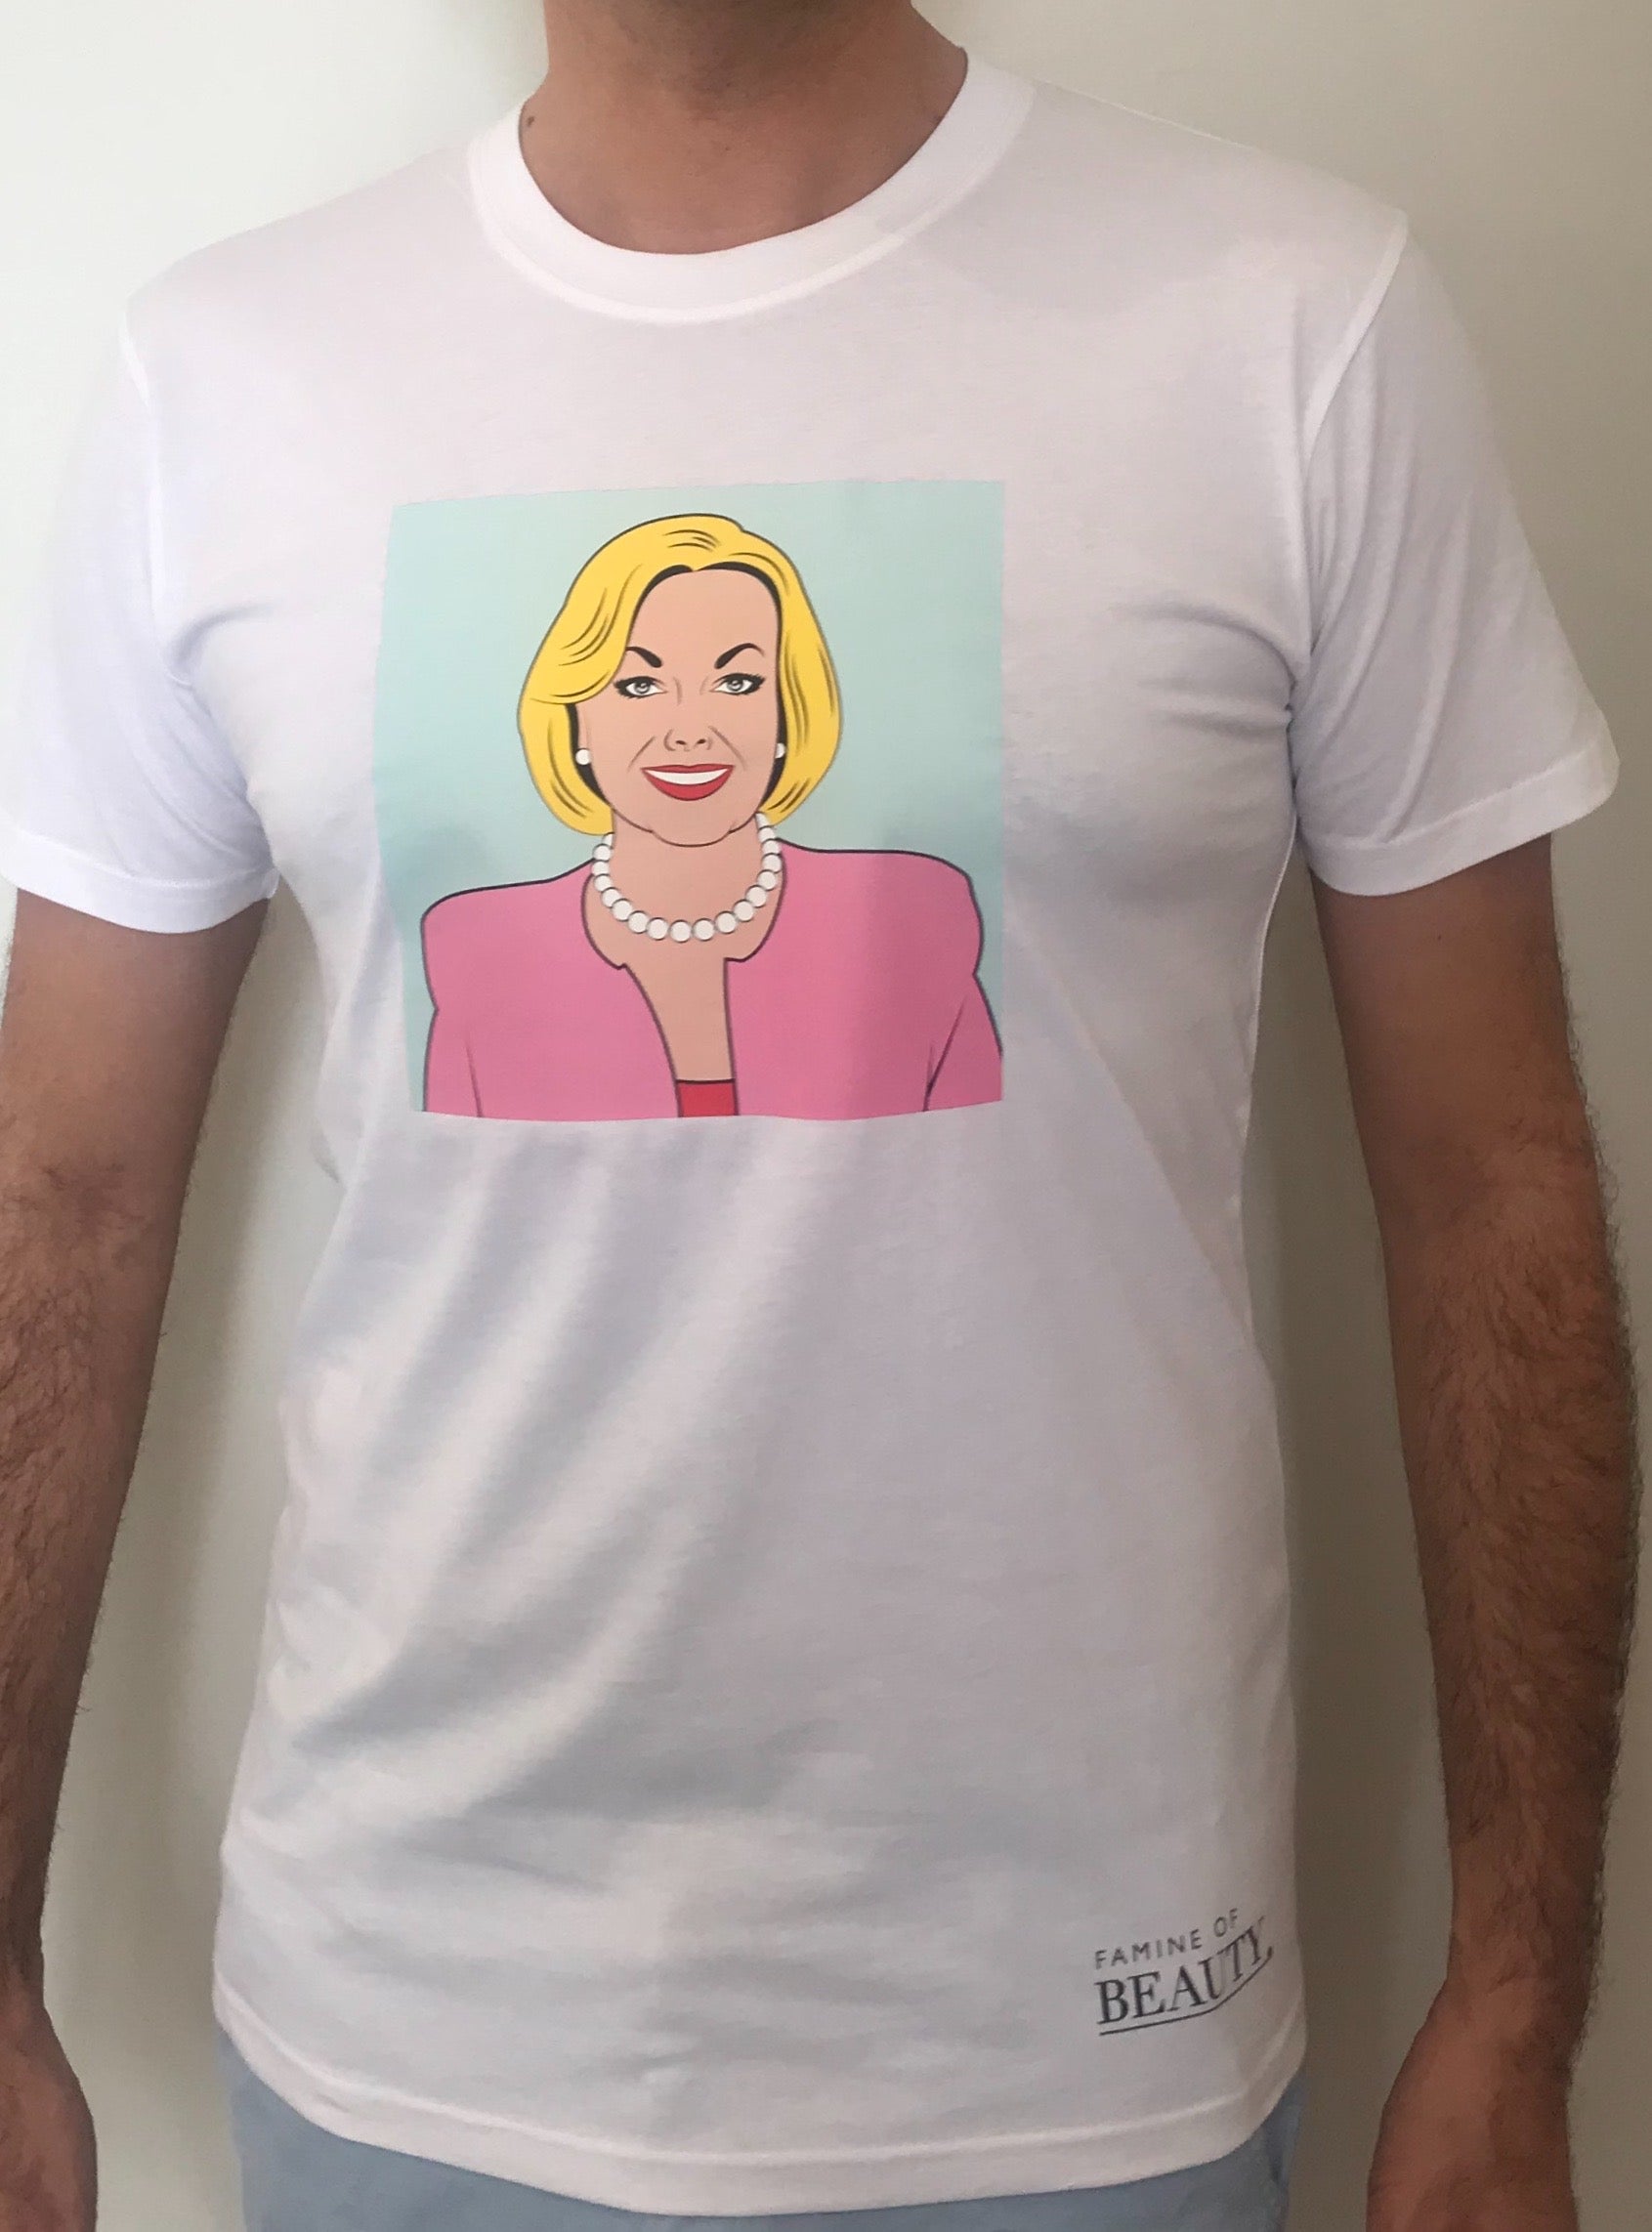 Judith Collins T-Shirt: Judylicious